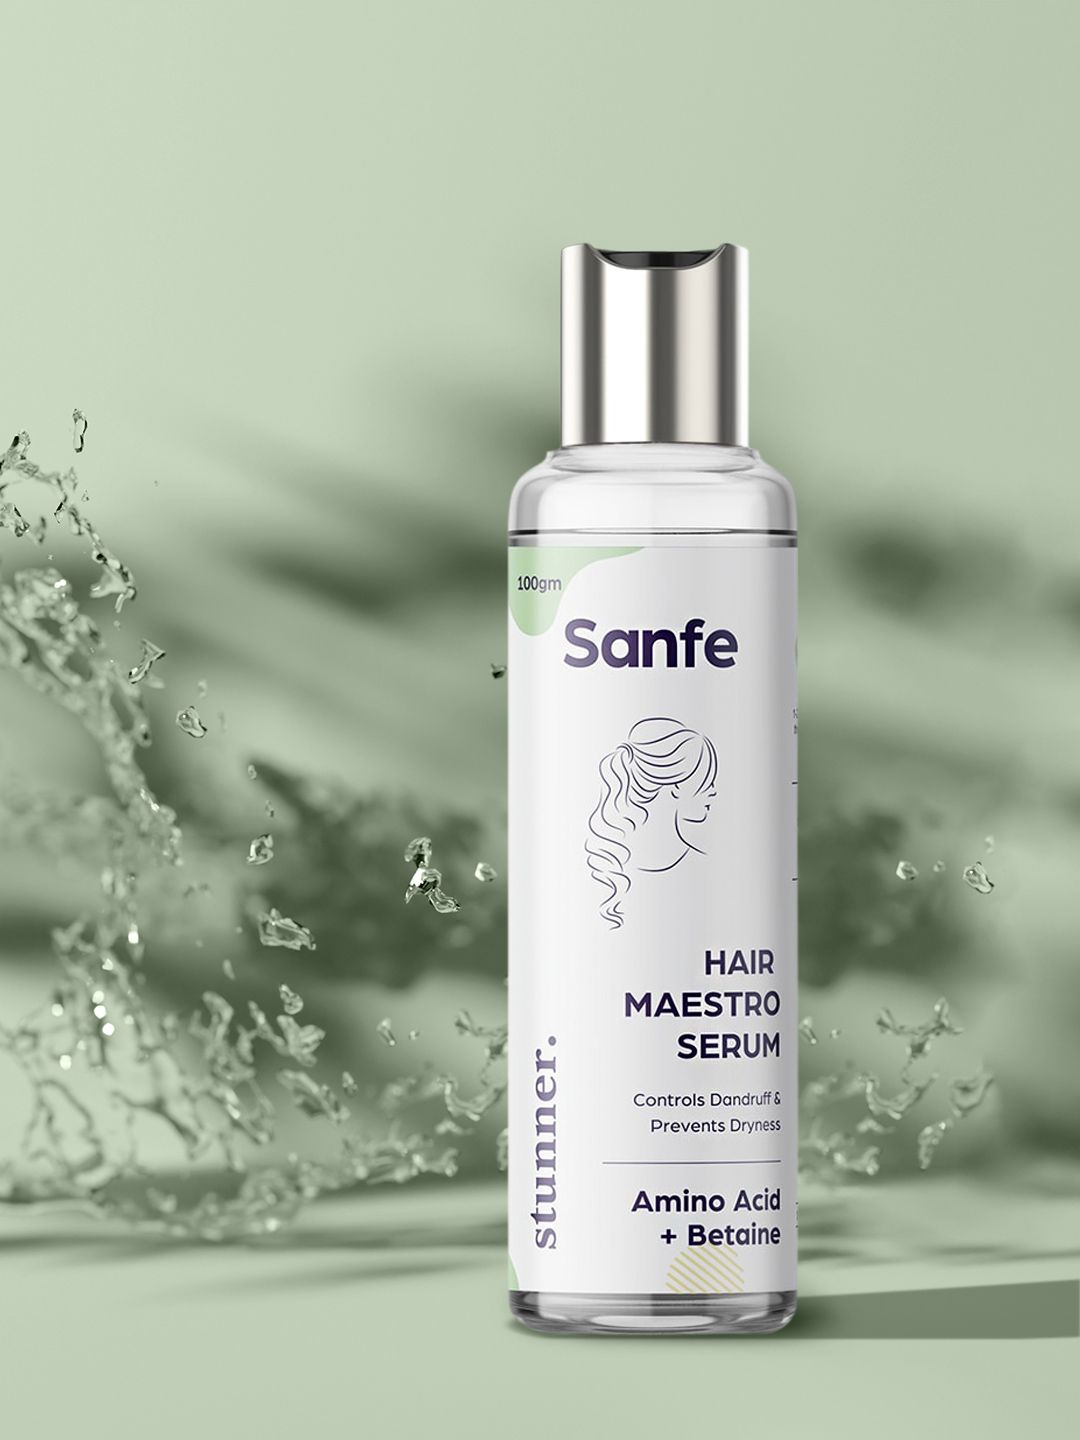 Sanfe Stunner Amino Acid Hair Maestro Serum For Growth, Split Ends & Grey Hair 100 ml Price in India